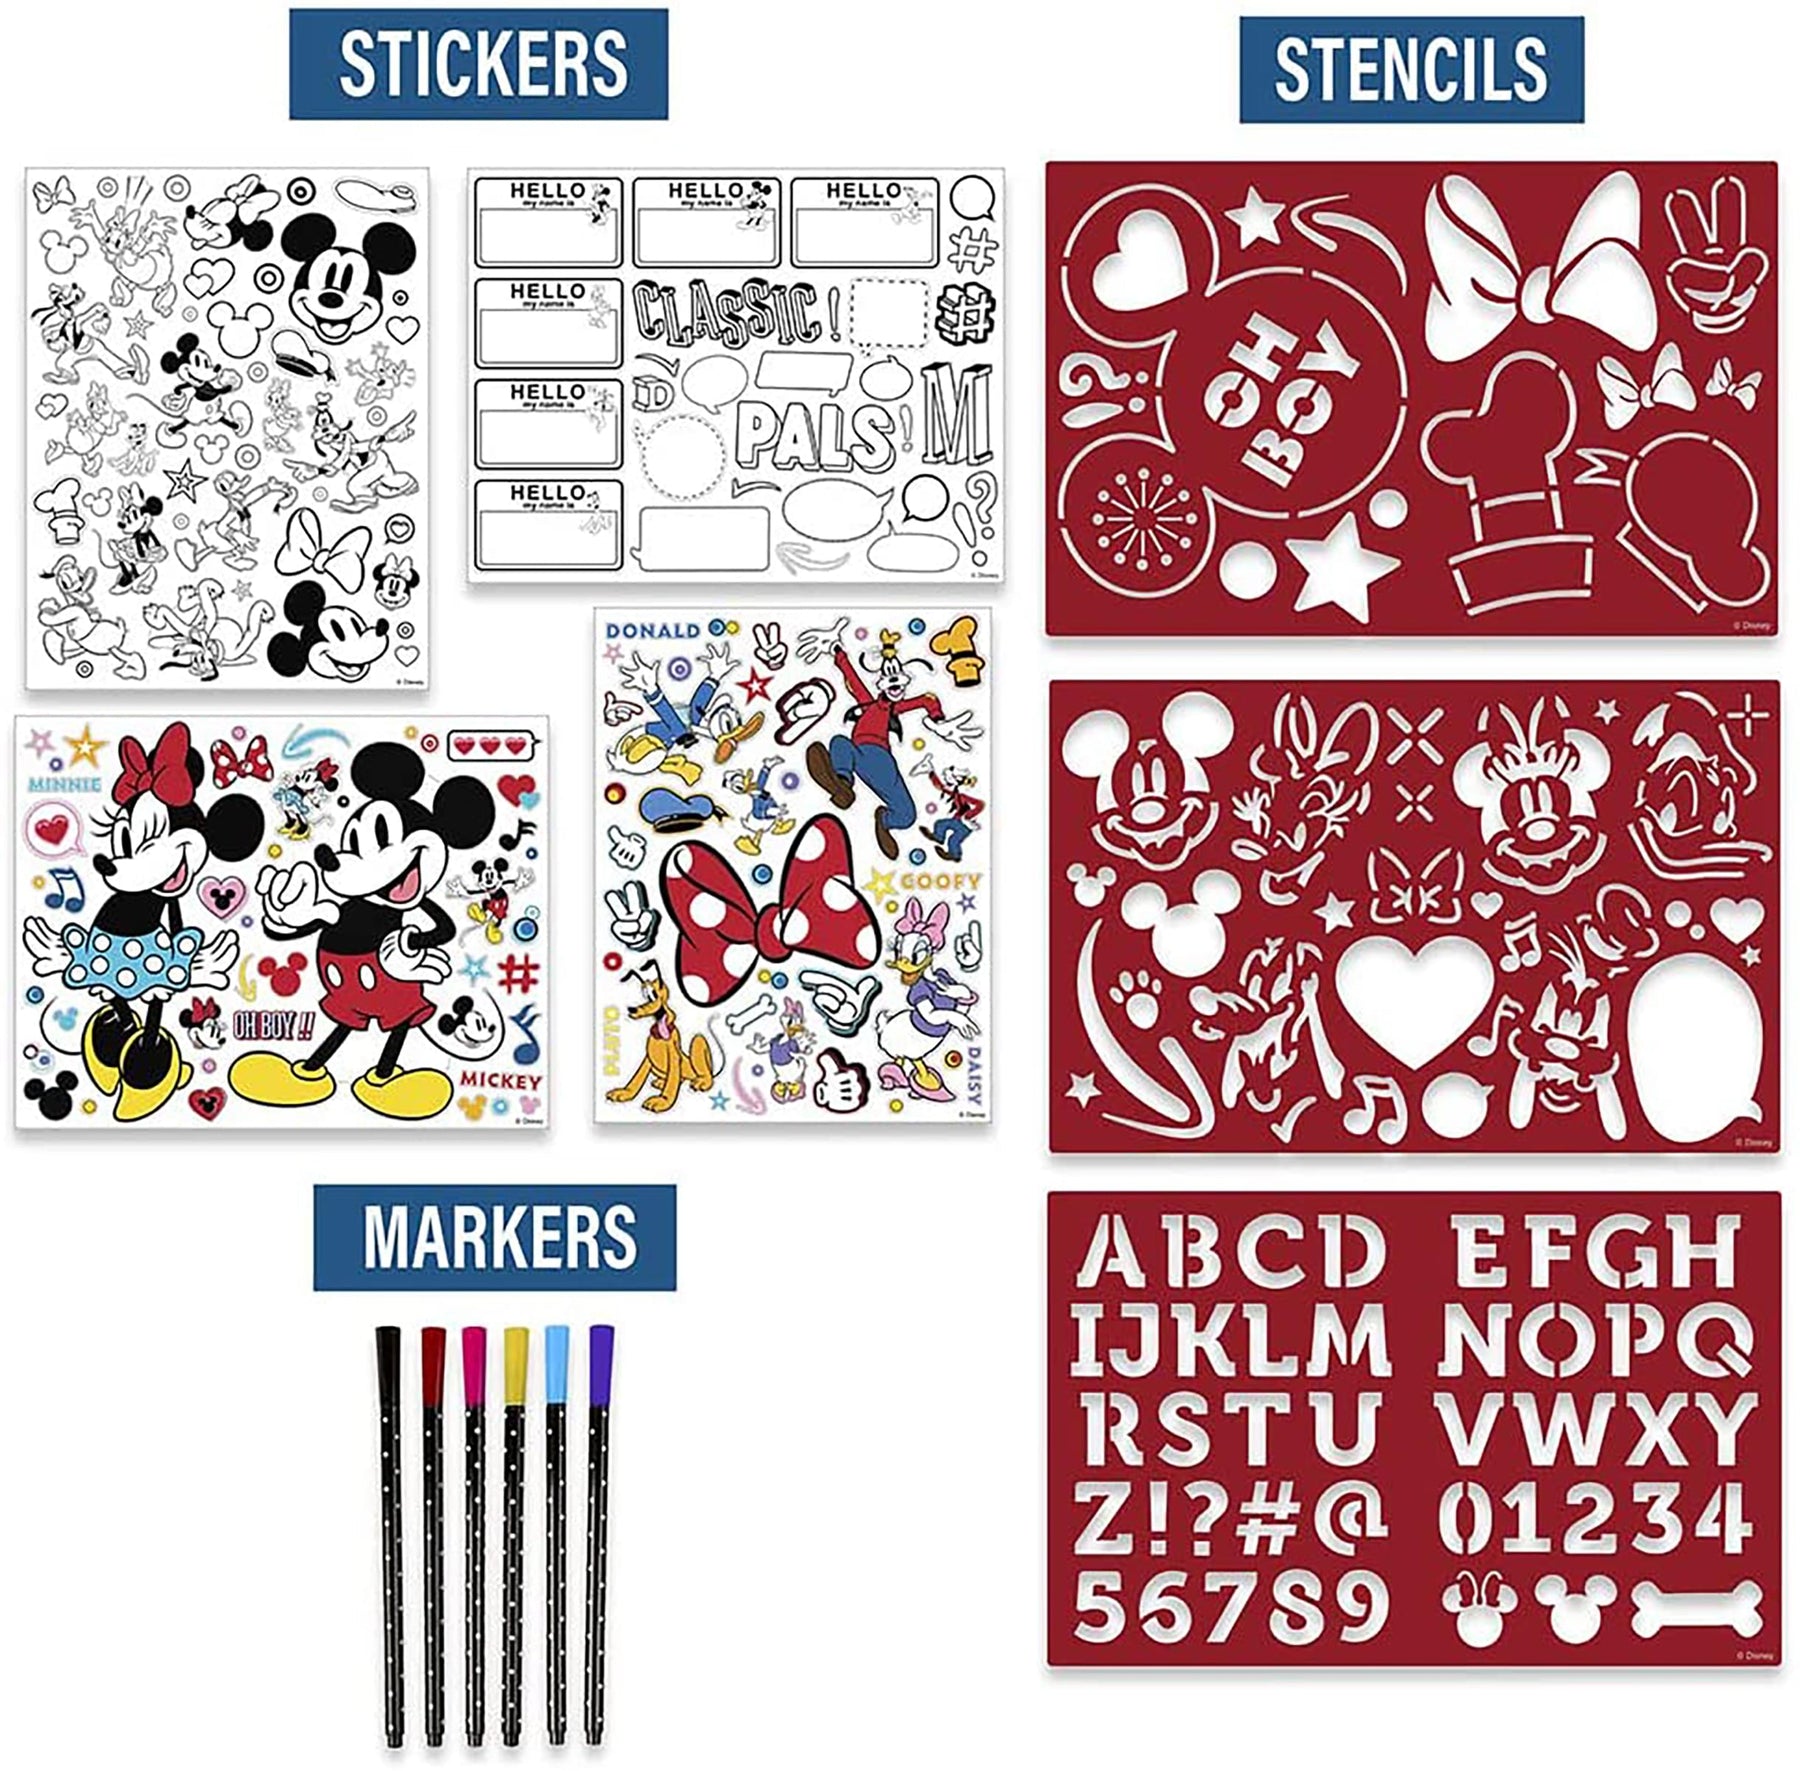 Disney Mickey & Friends DIY Media Creator Design Kit